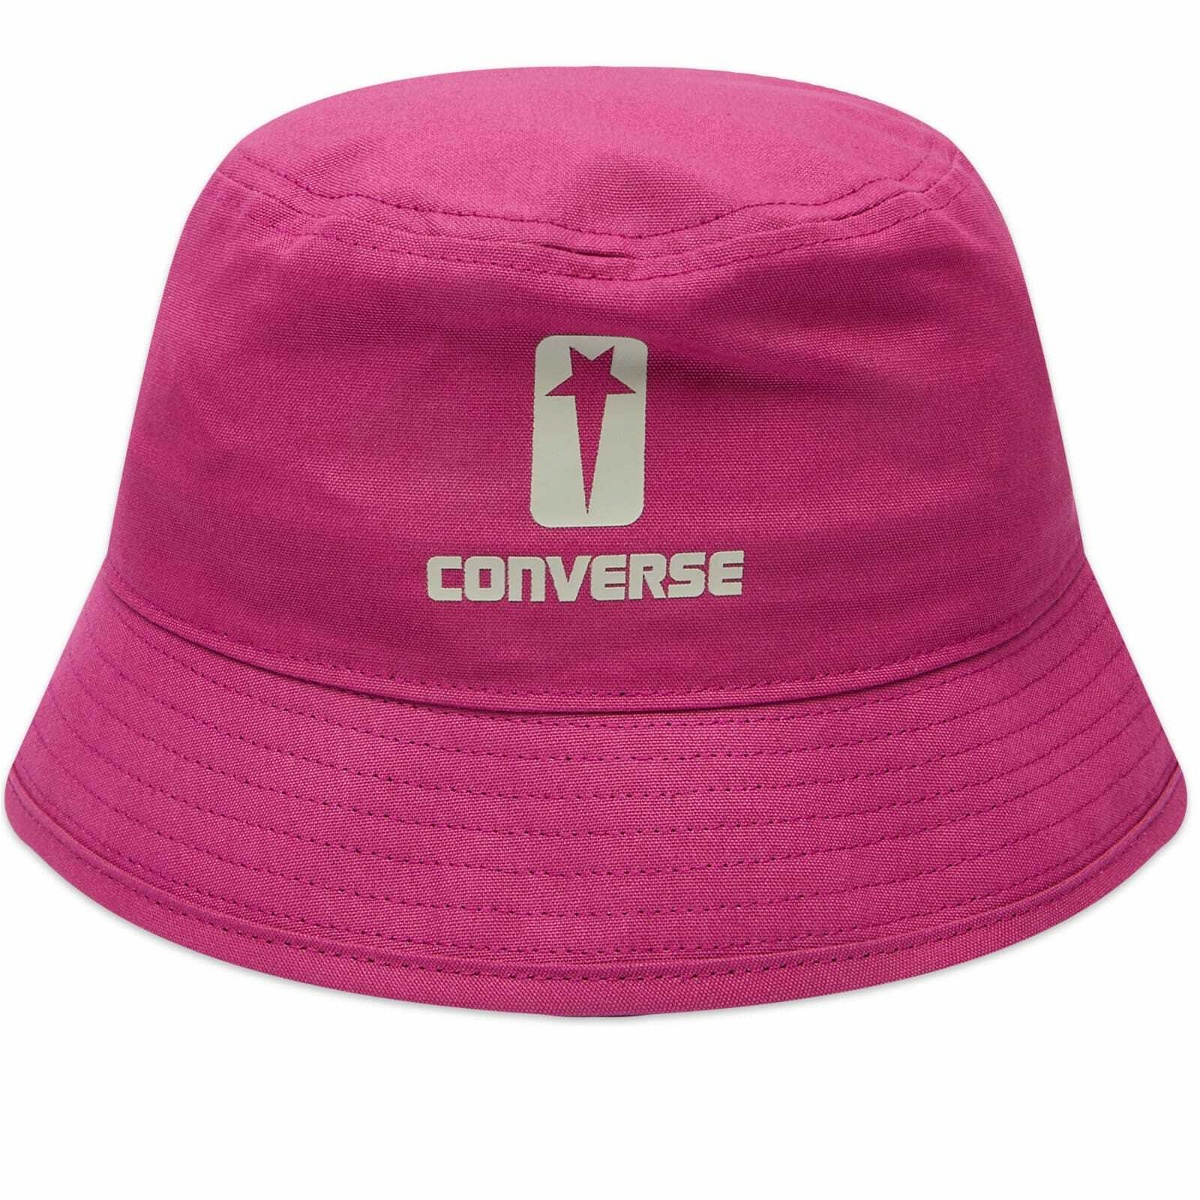 Converse x DRKSHDW Bucket Hat in Hot Pink Converse